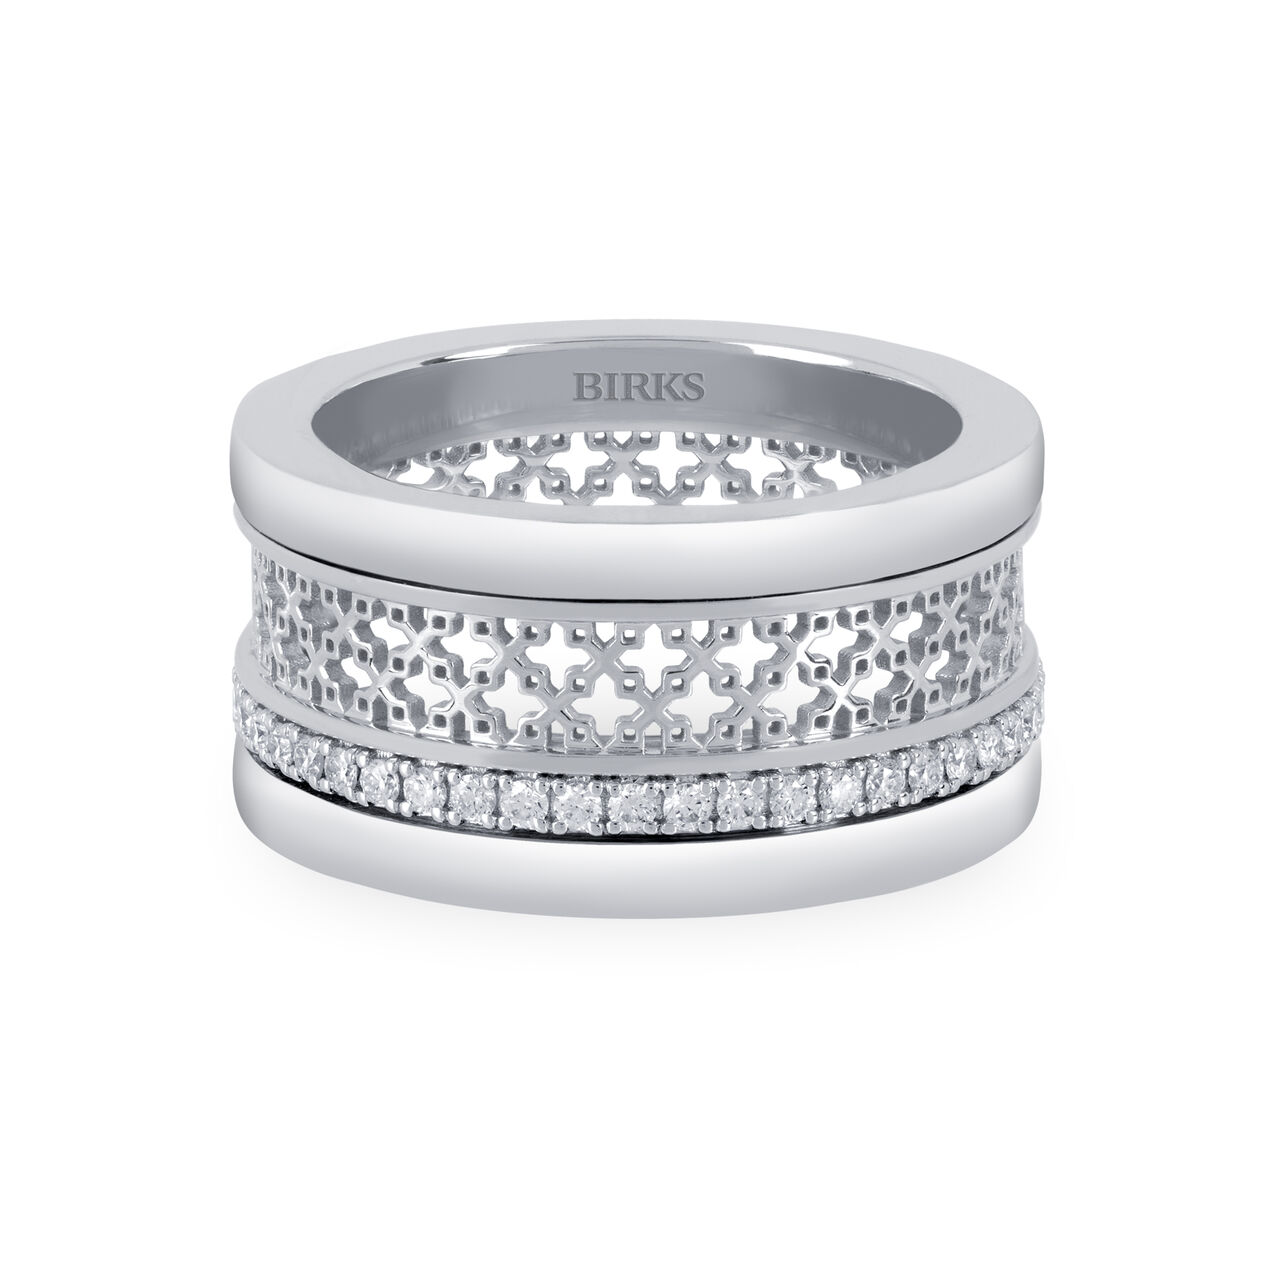 Birks Dare to Dream ® White Gold and Diamond Ring 450015429264